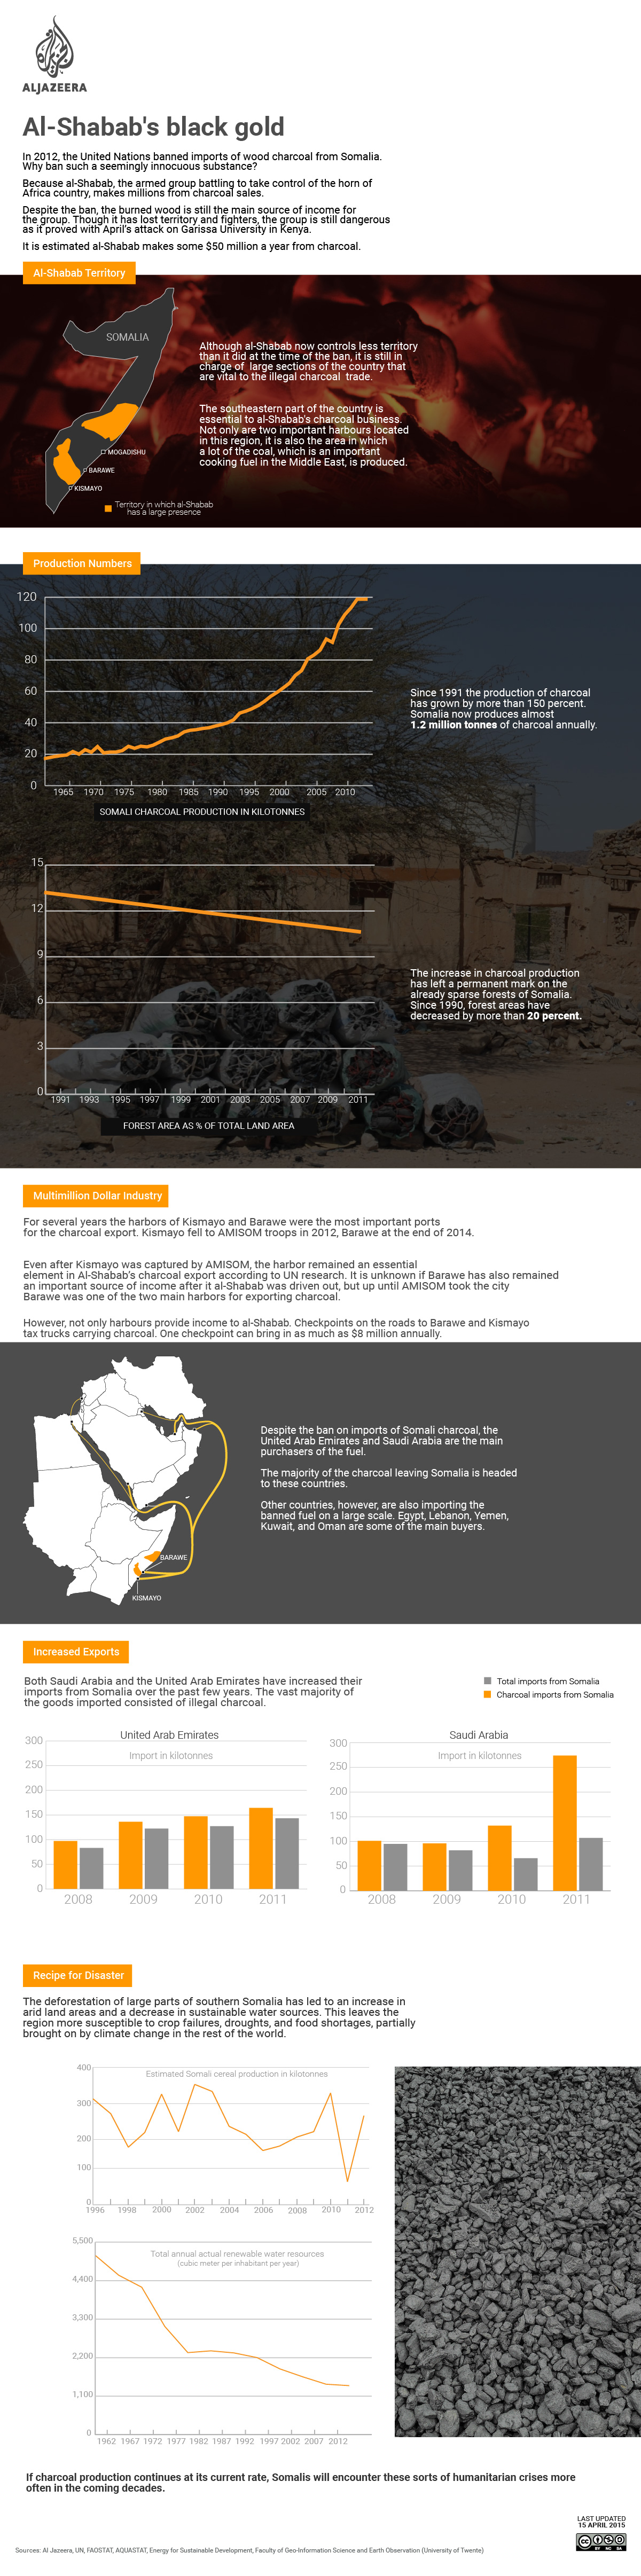 al shabab somalia attack infographic